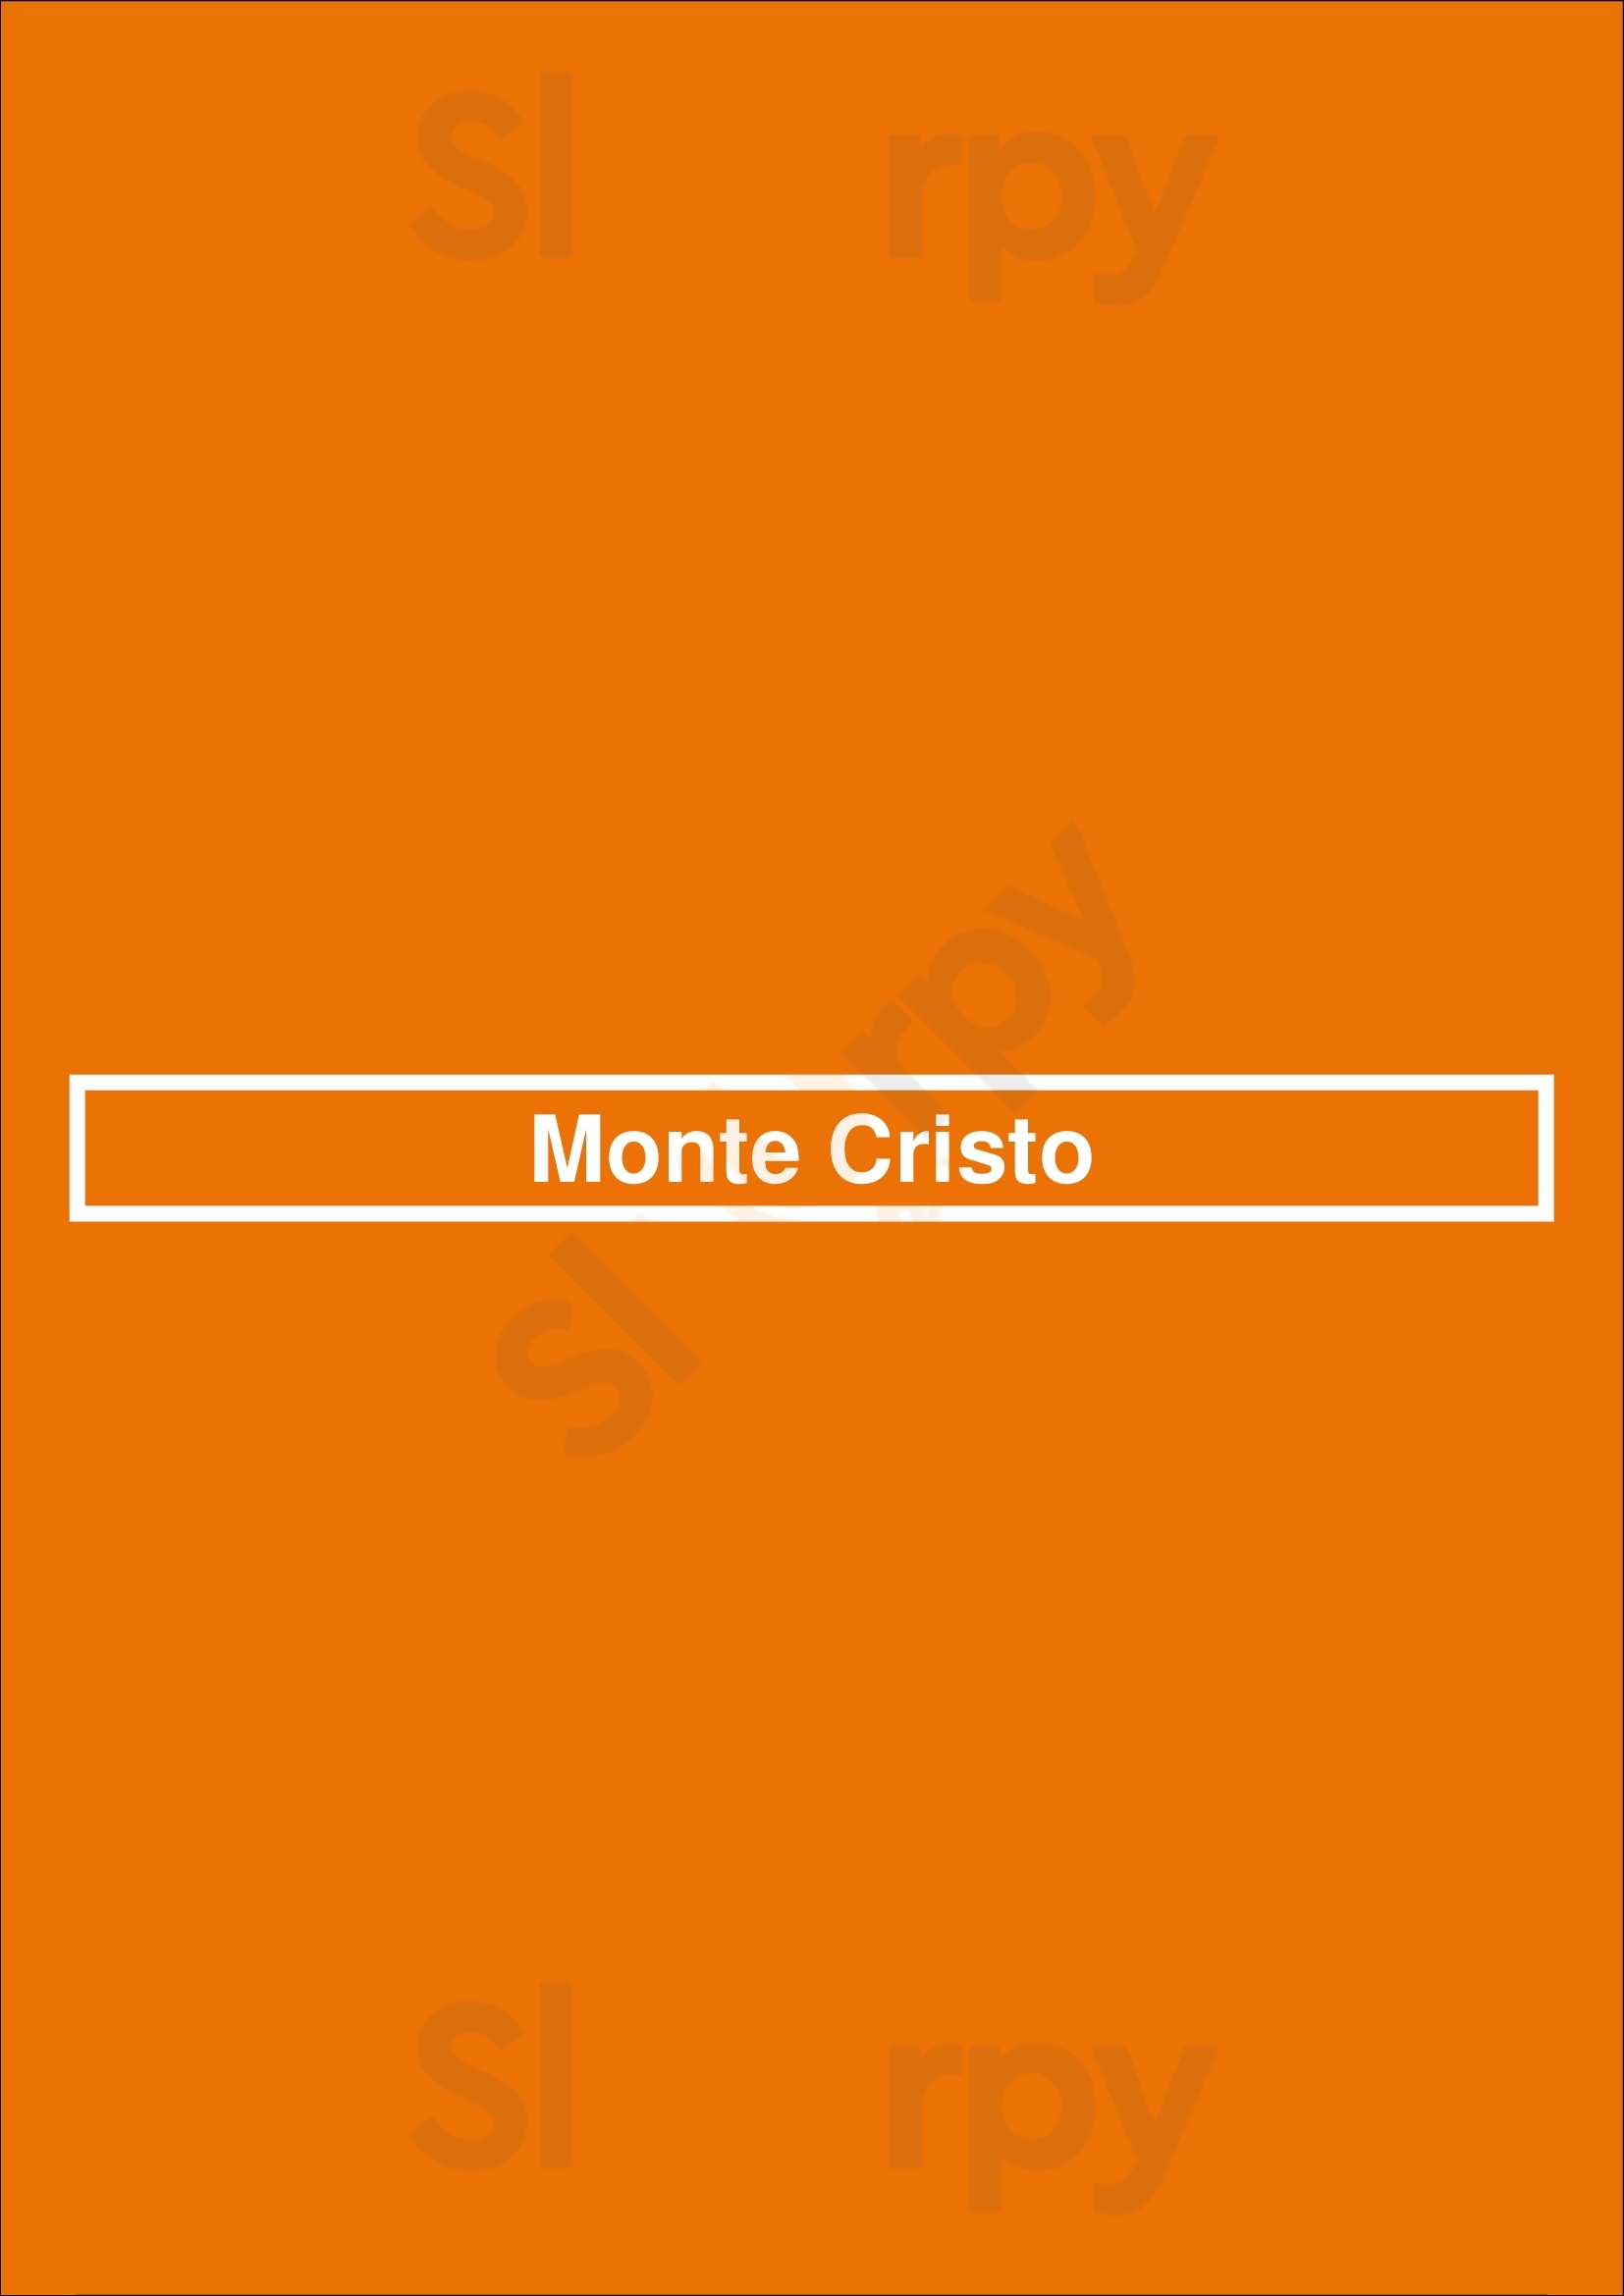 Monte Cristo Paris Menu - 1